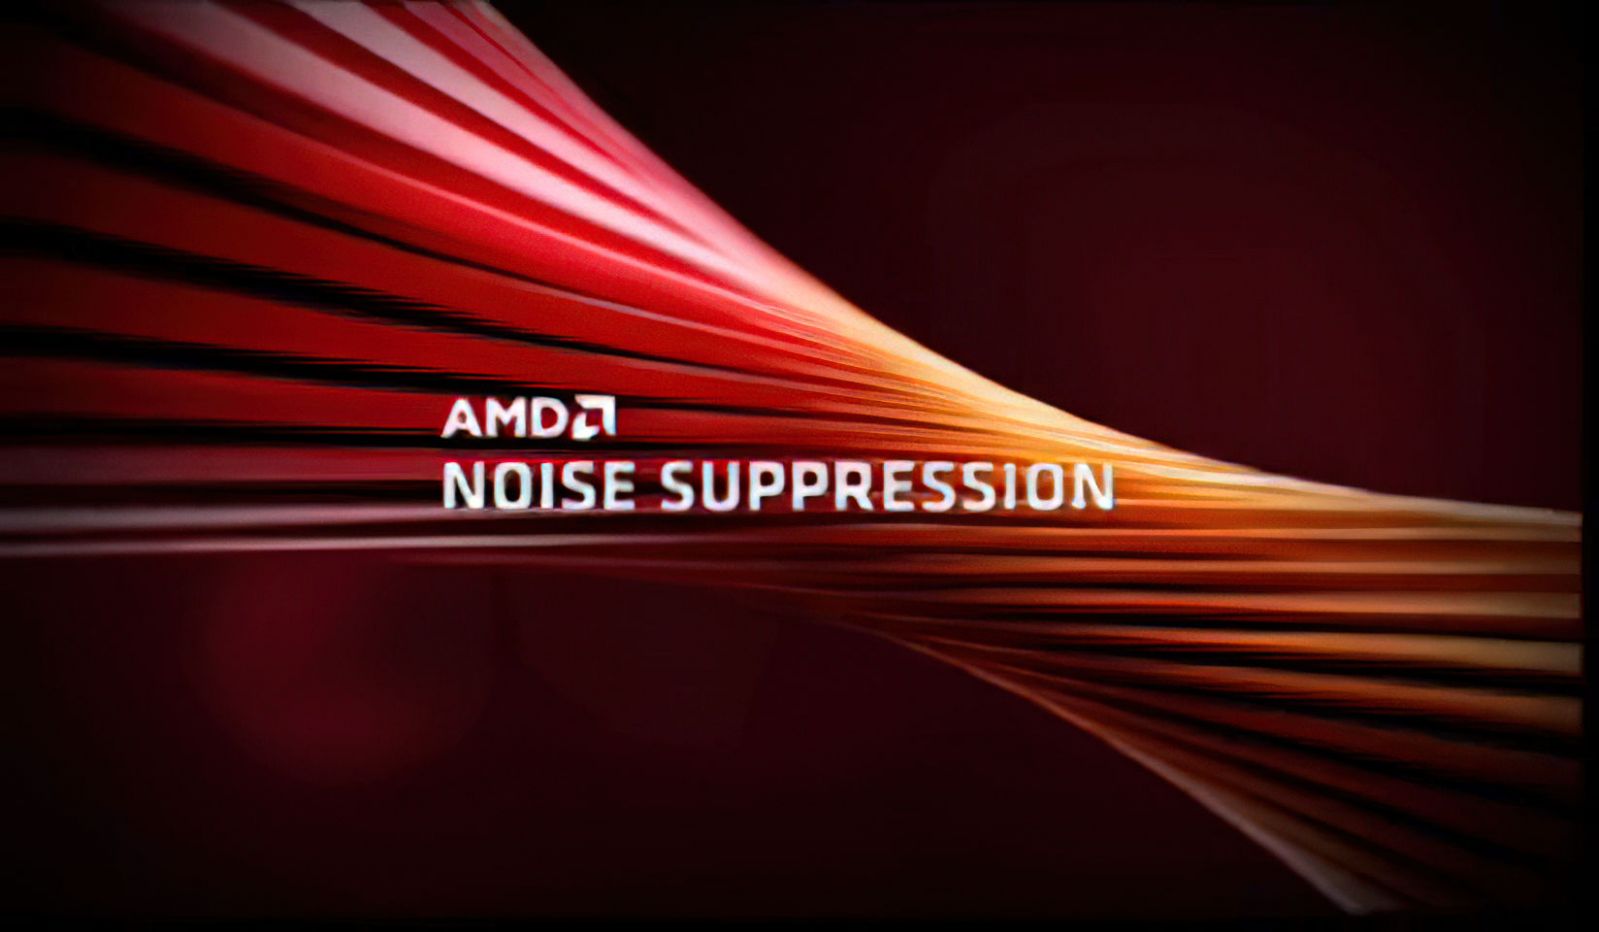 AMD-NOISE-SUPPRESSION-1.jpg